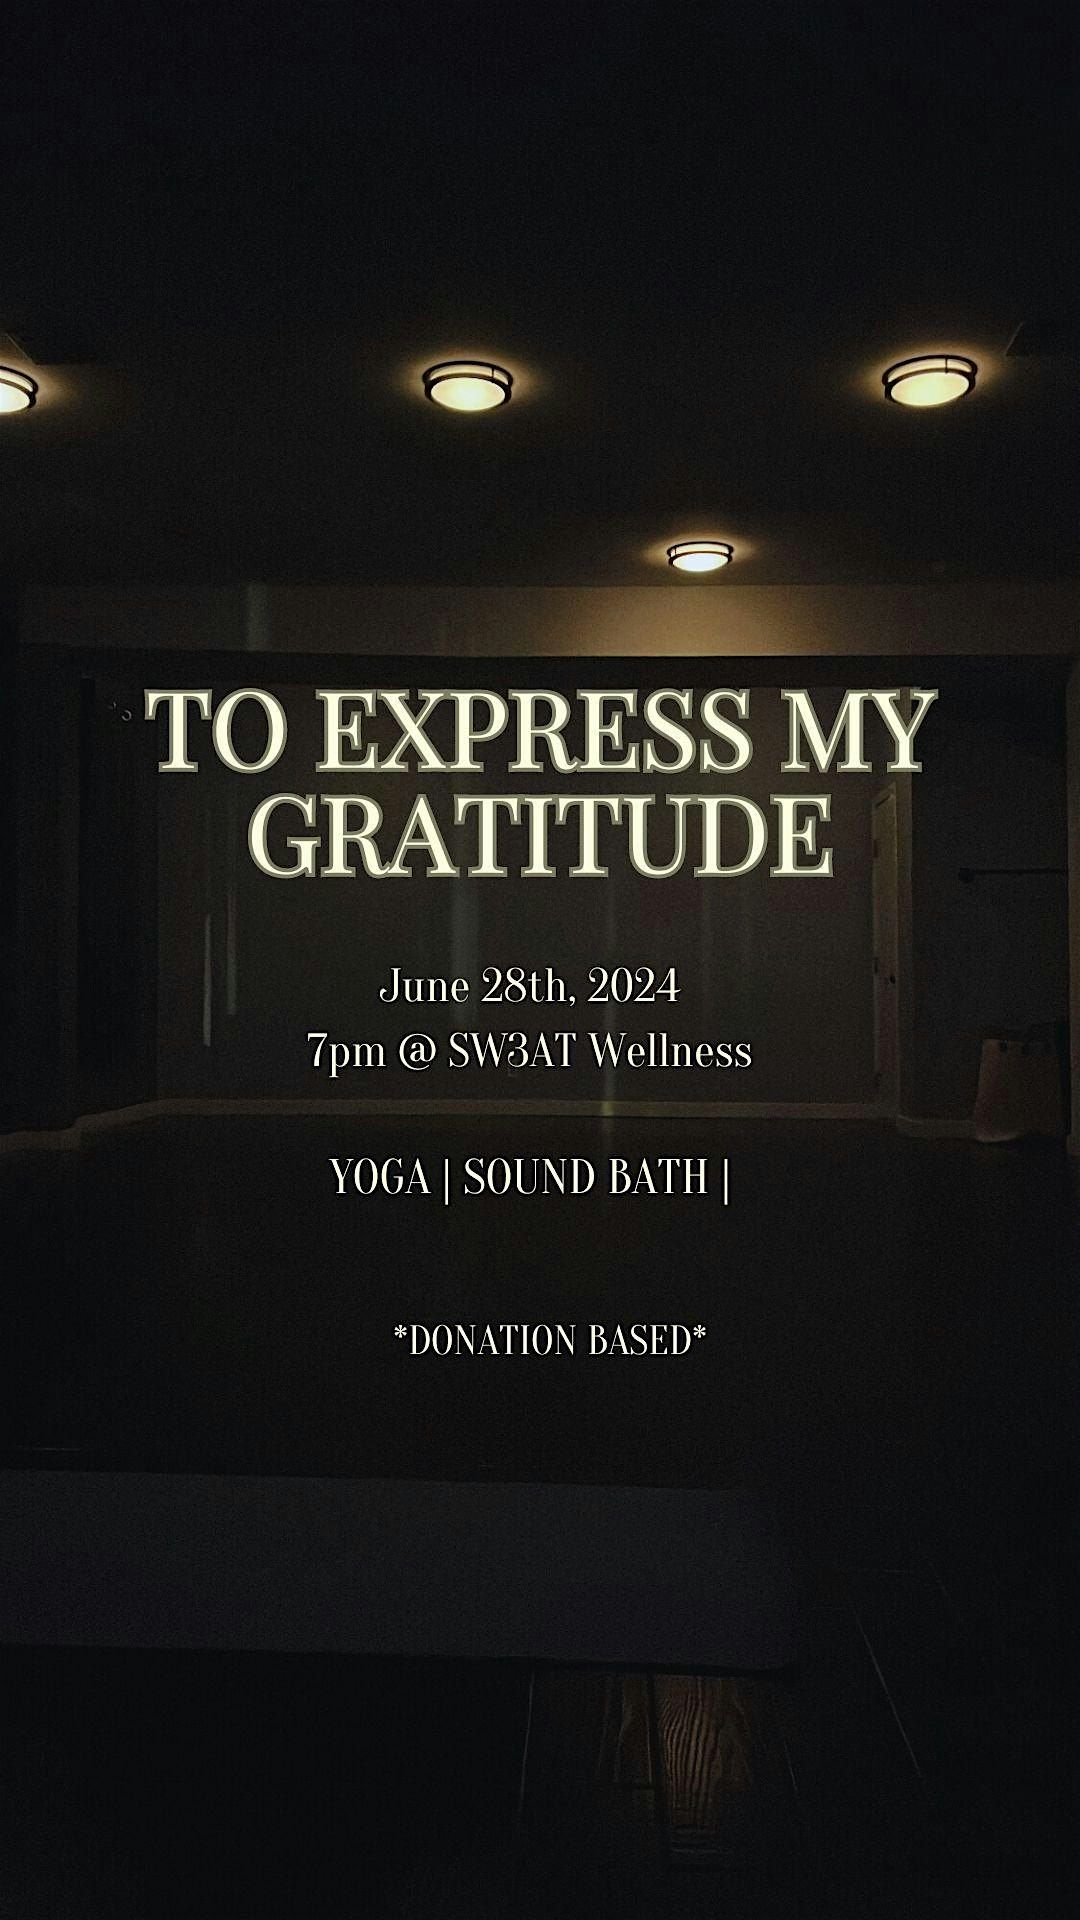 @provalyoga: "to express my gratitude"